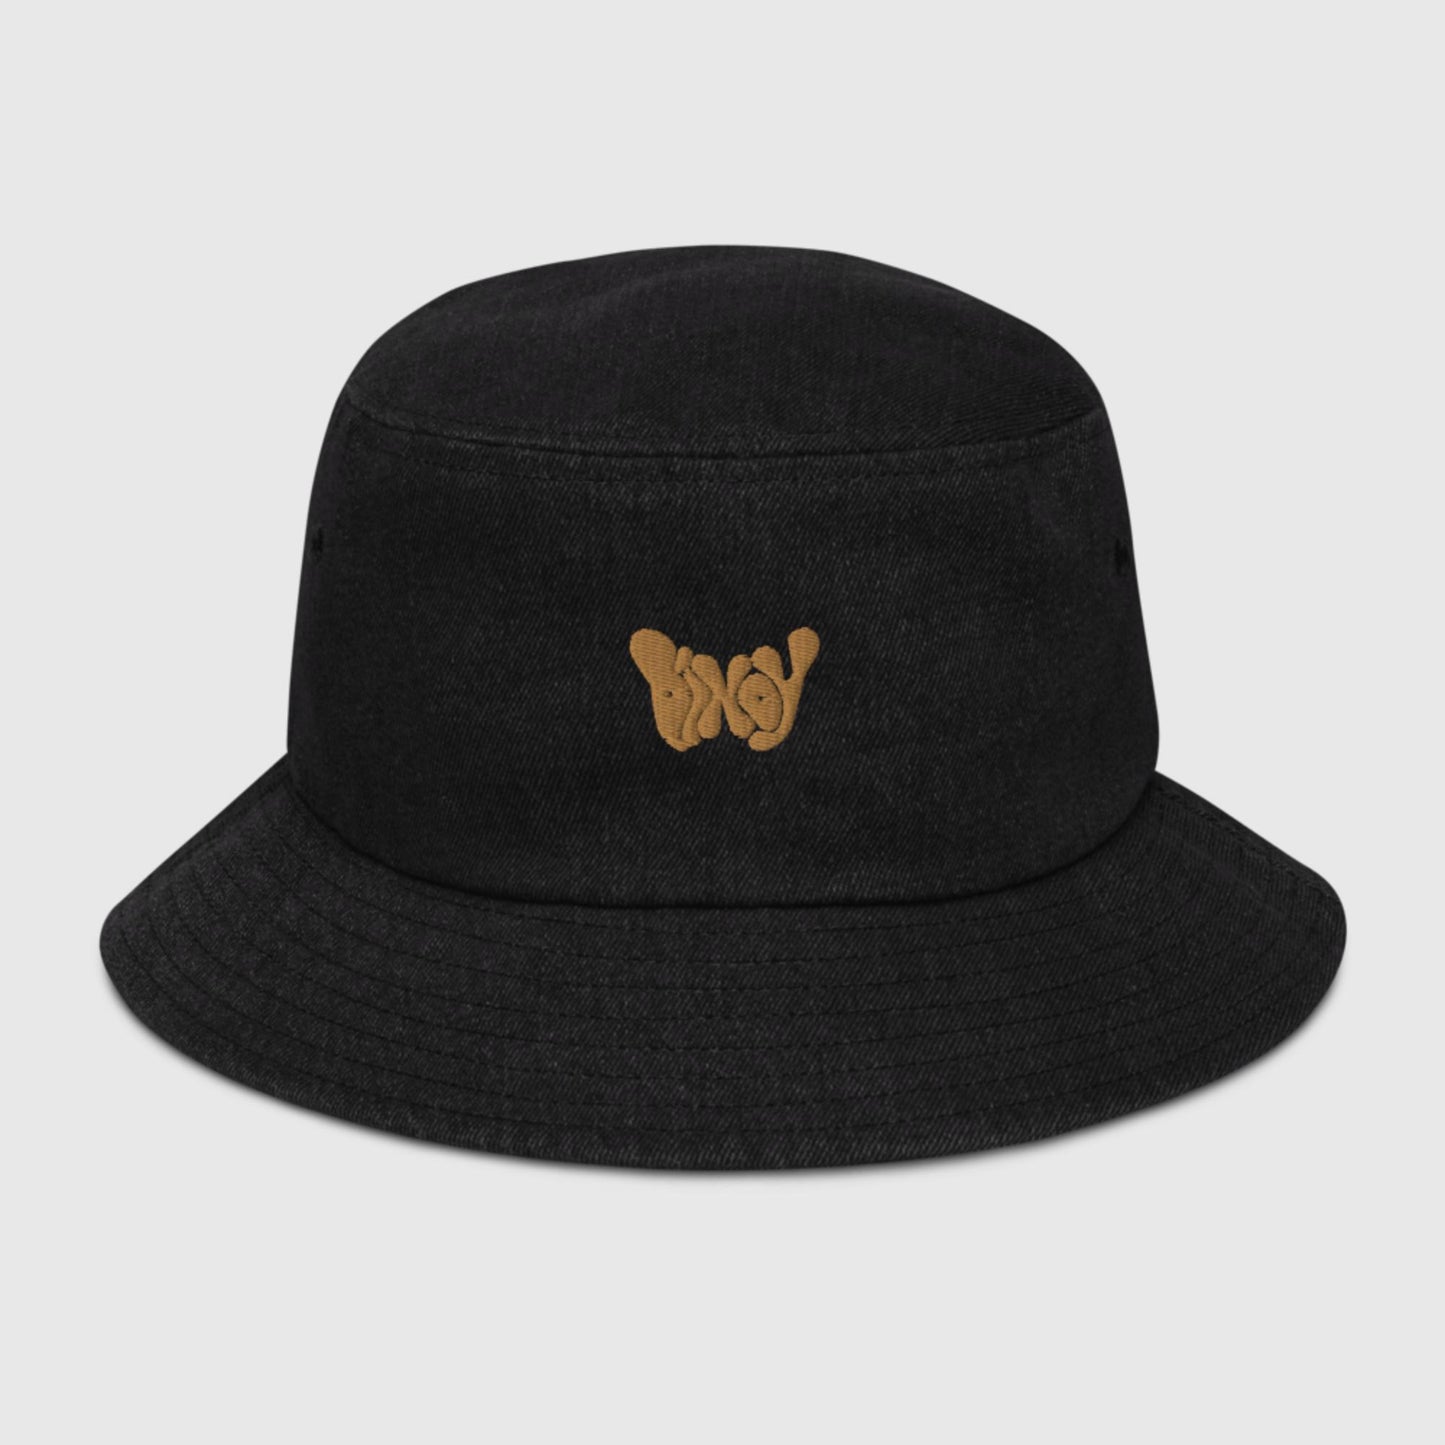 BINOY Denim Bucket Hat in Black